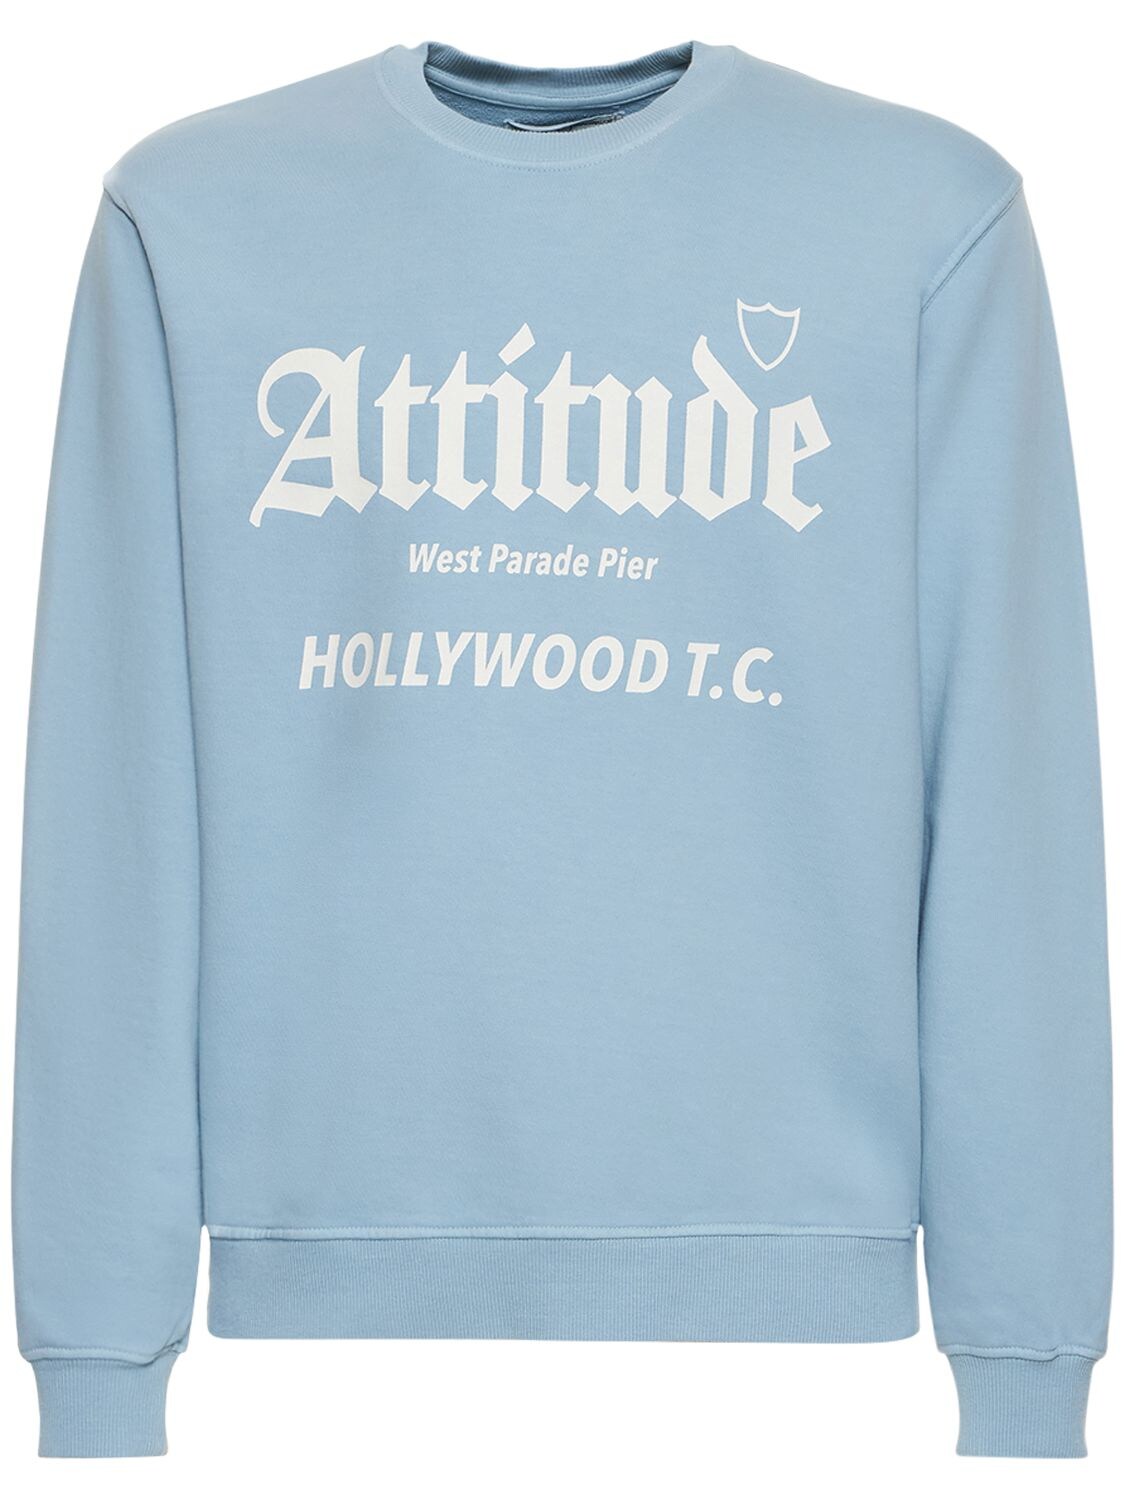 HTC LOS ANGELES Attitude Print Cotton Sweatshirt